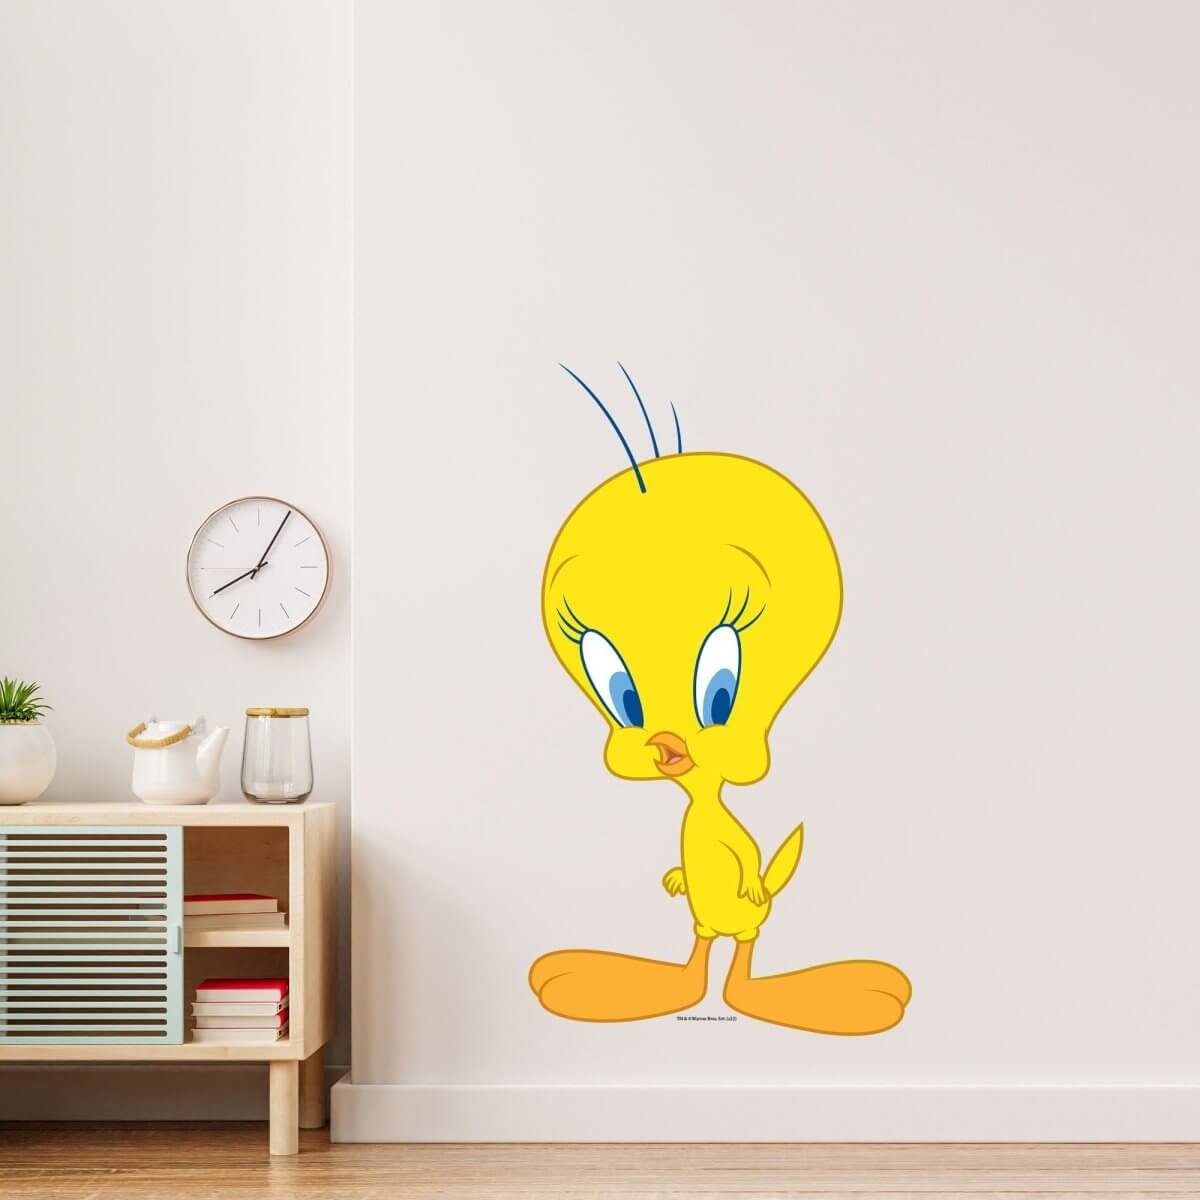 Kismet Decals Looney Tunes Tweety Bird Licensed Wall Sticker - Easy DIY Home & Kids Room Decor Wall Decal Art - Kismet Decals